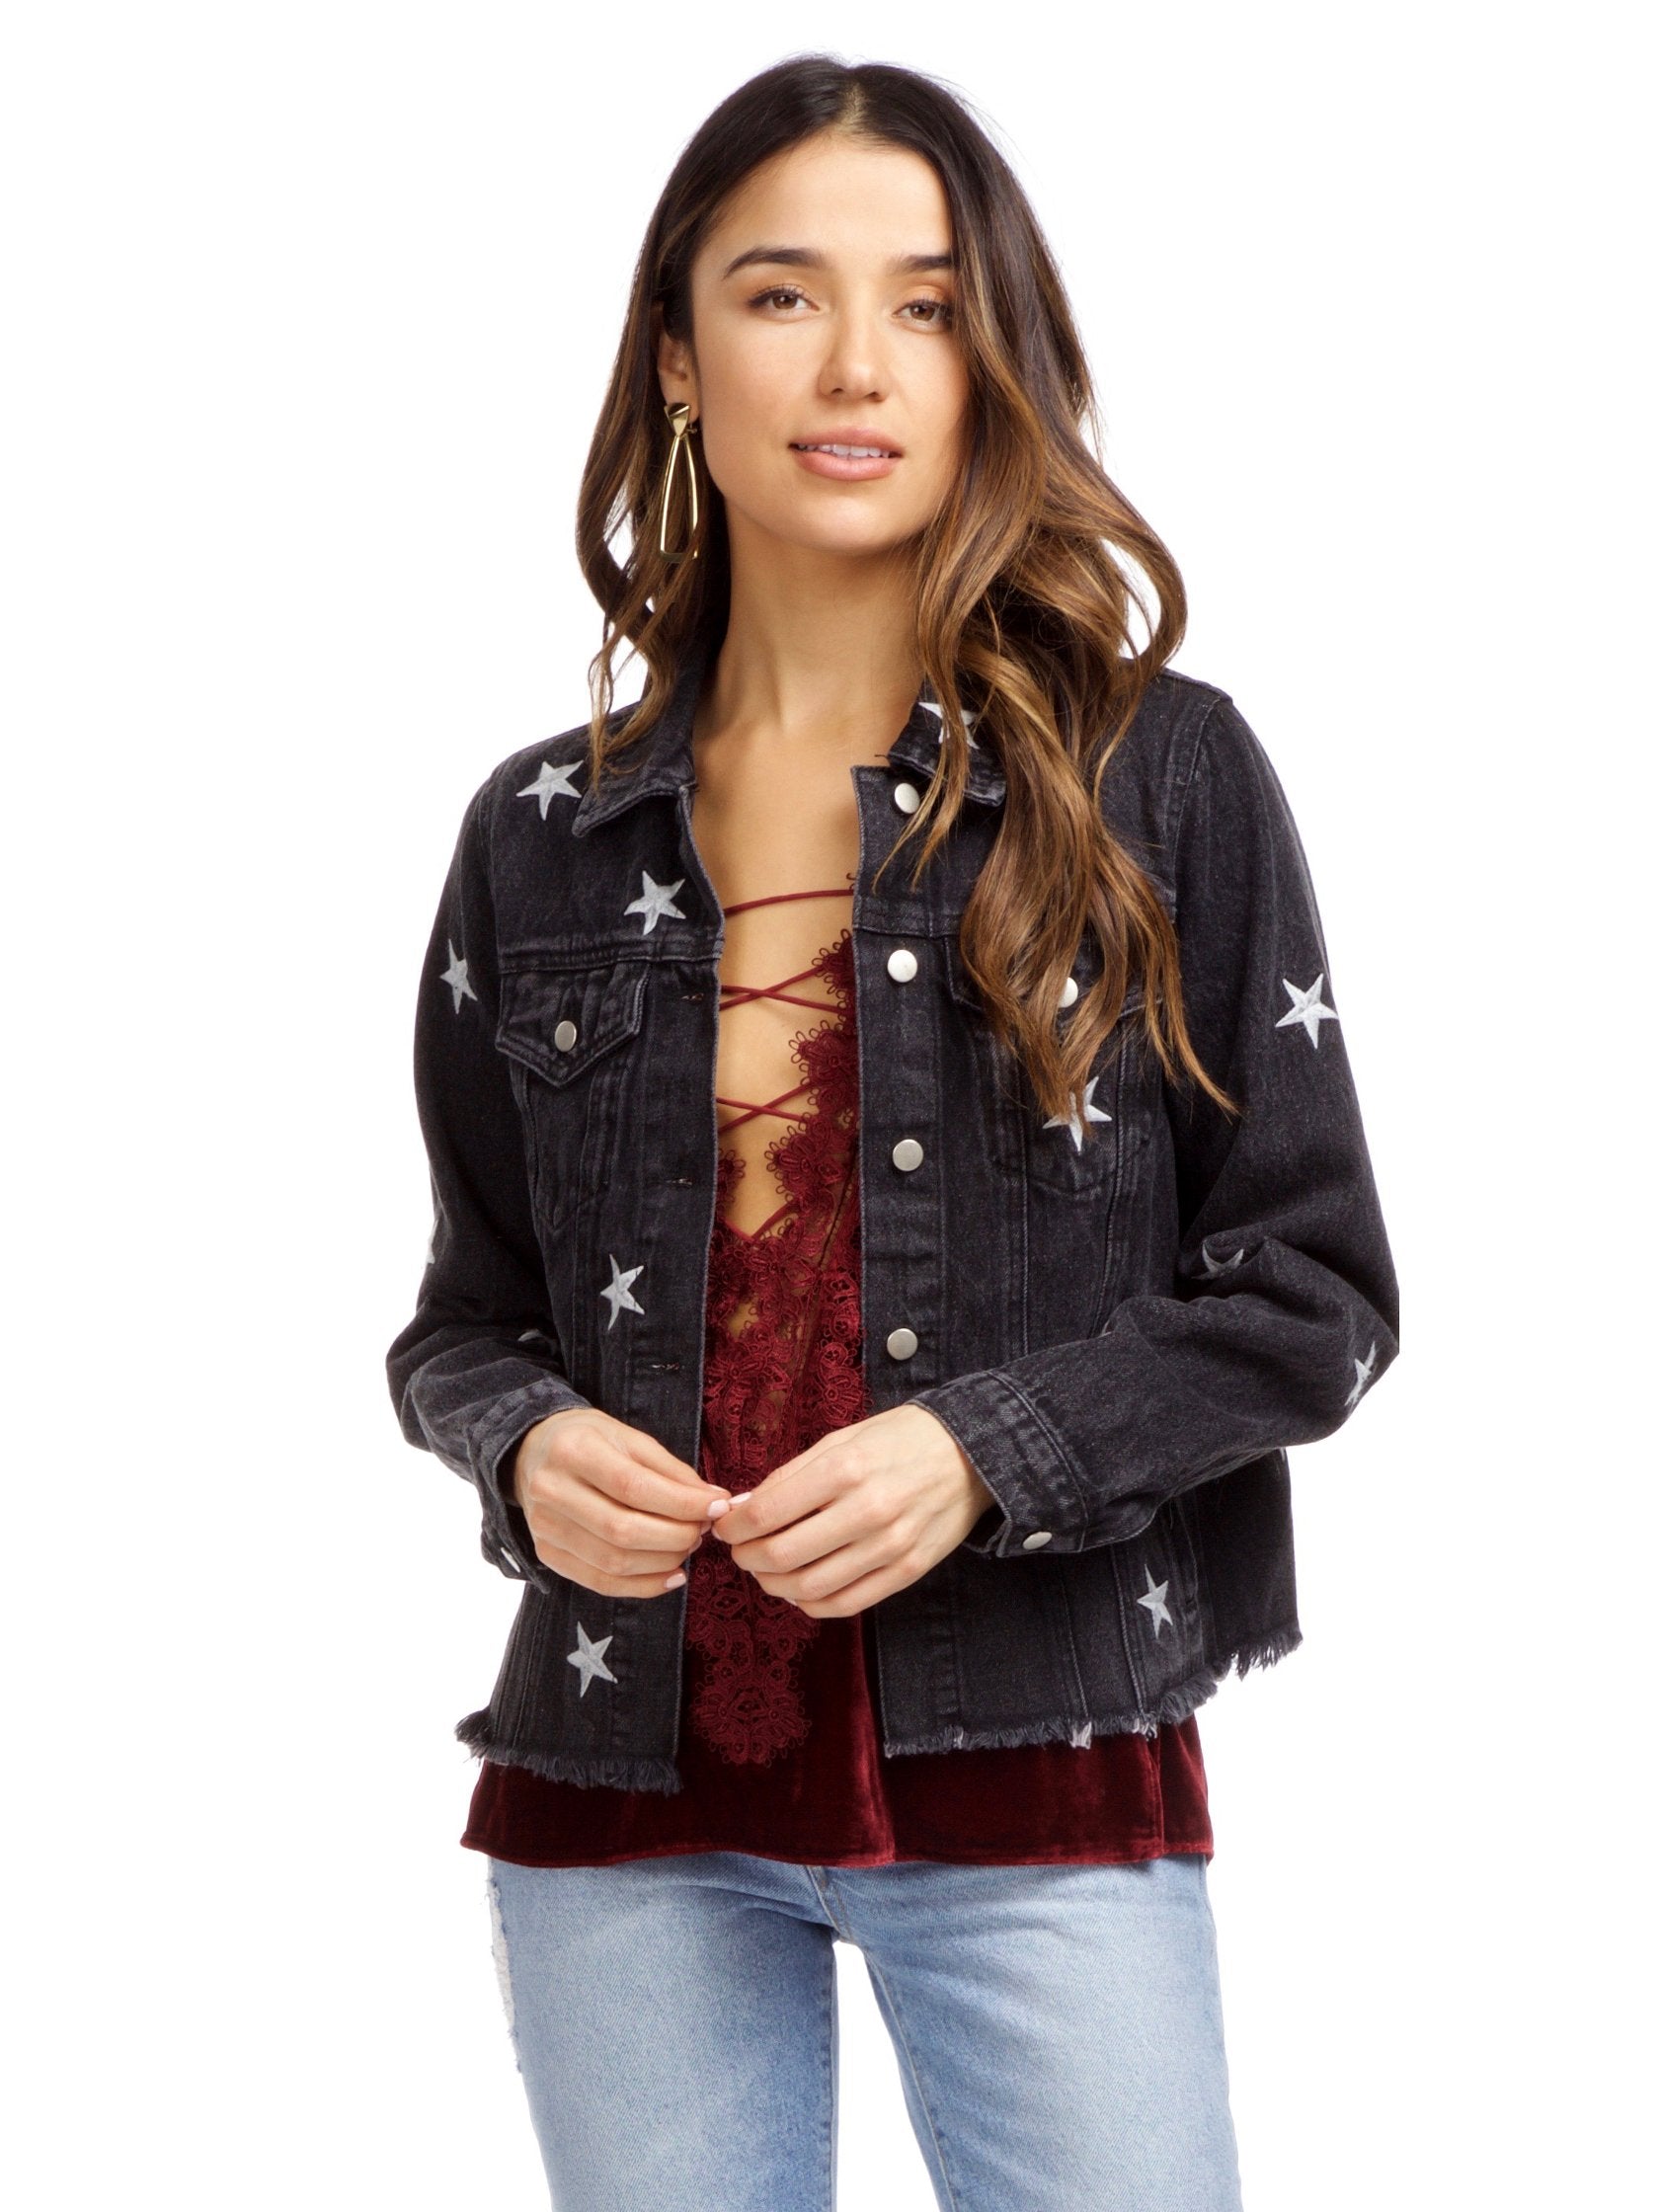 Woman wearing a jacket rental from FashionPass called Stardust Denim Jacket